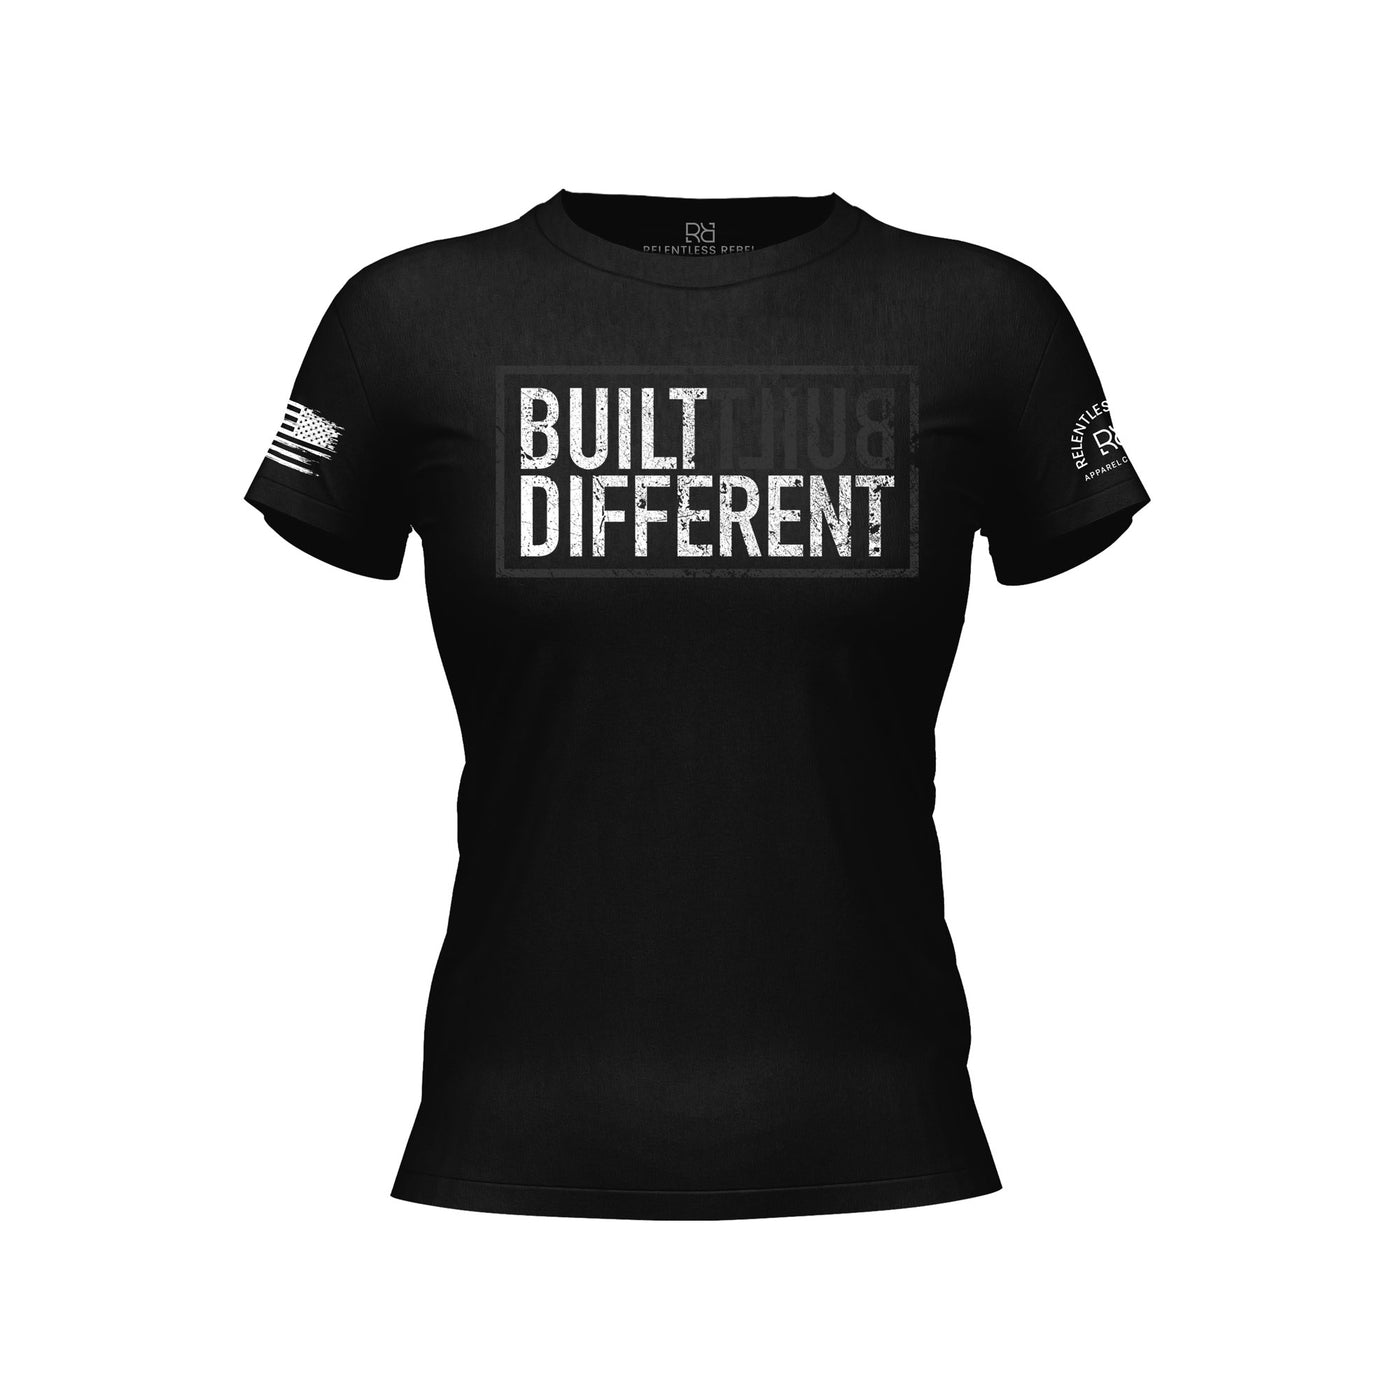 Built Different Women's Solid Black front design t-shirt